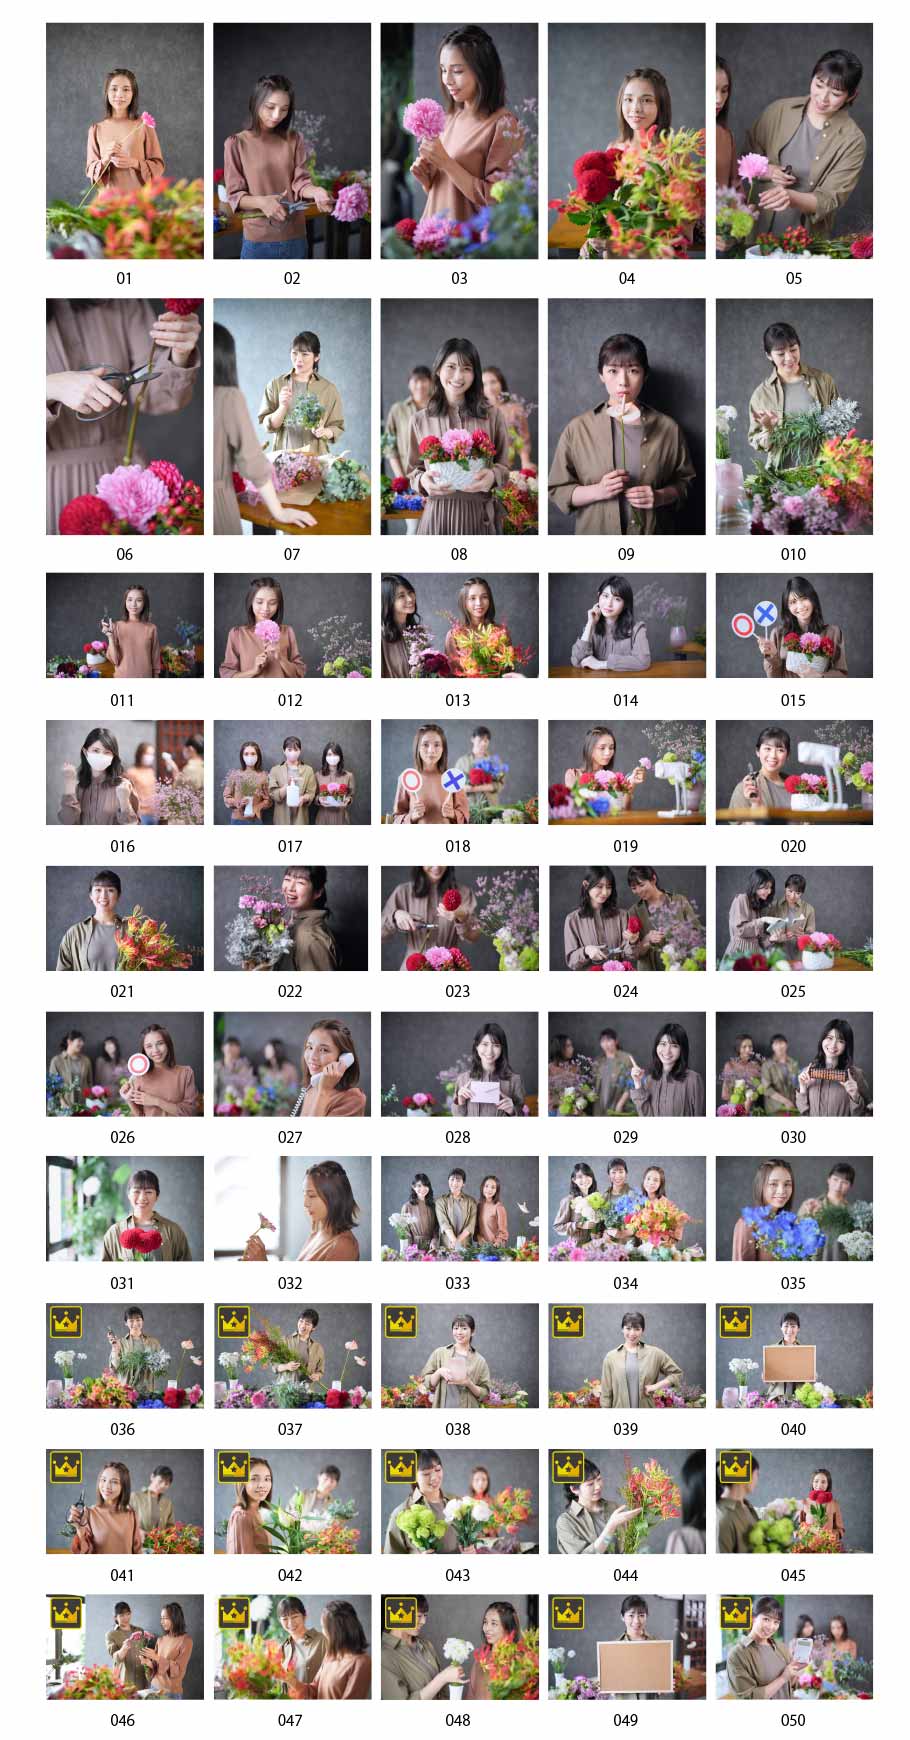 Women and flower photos